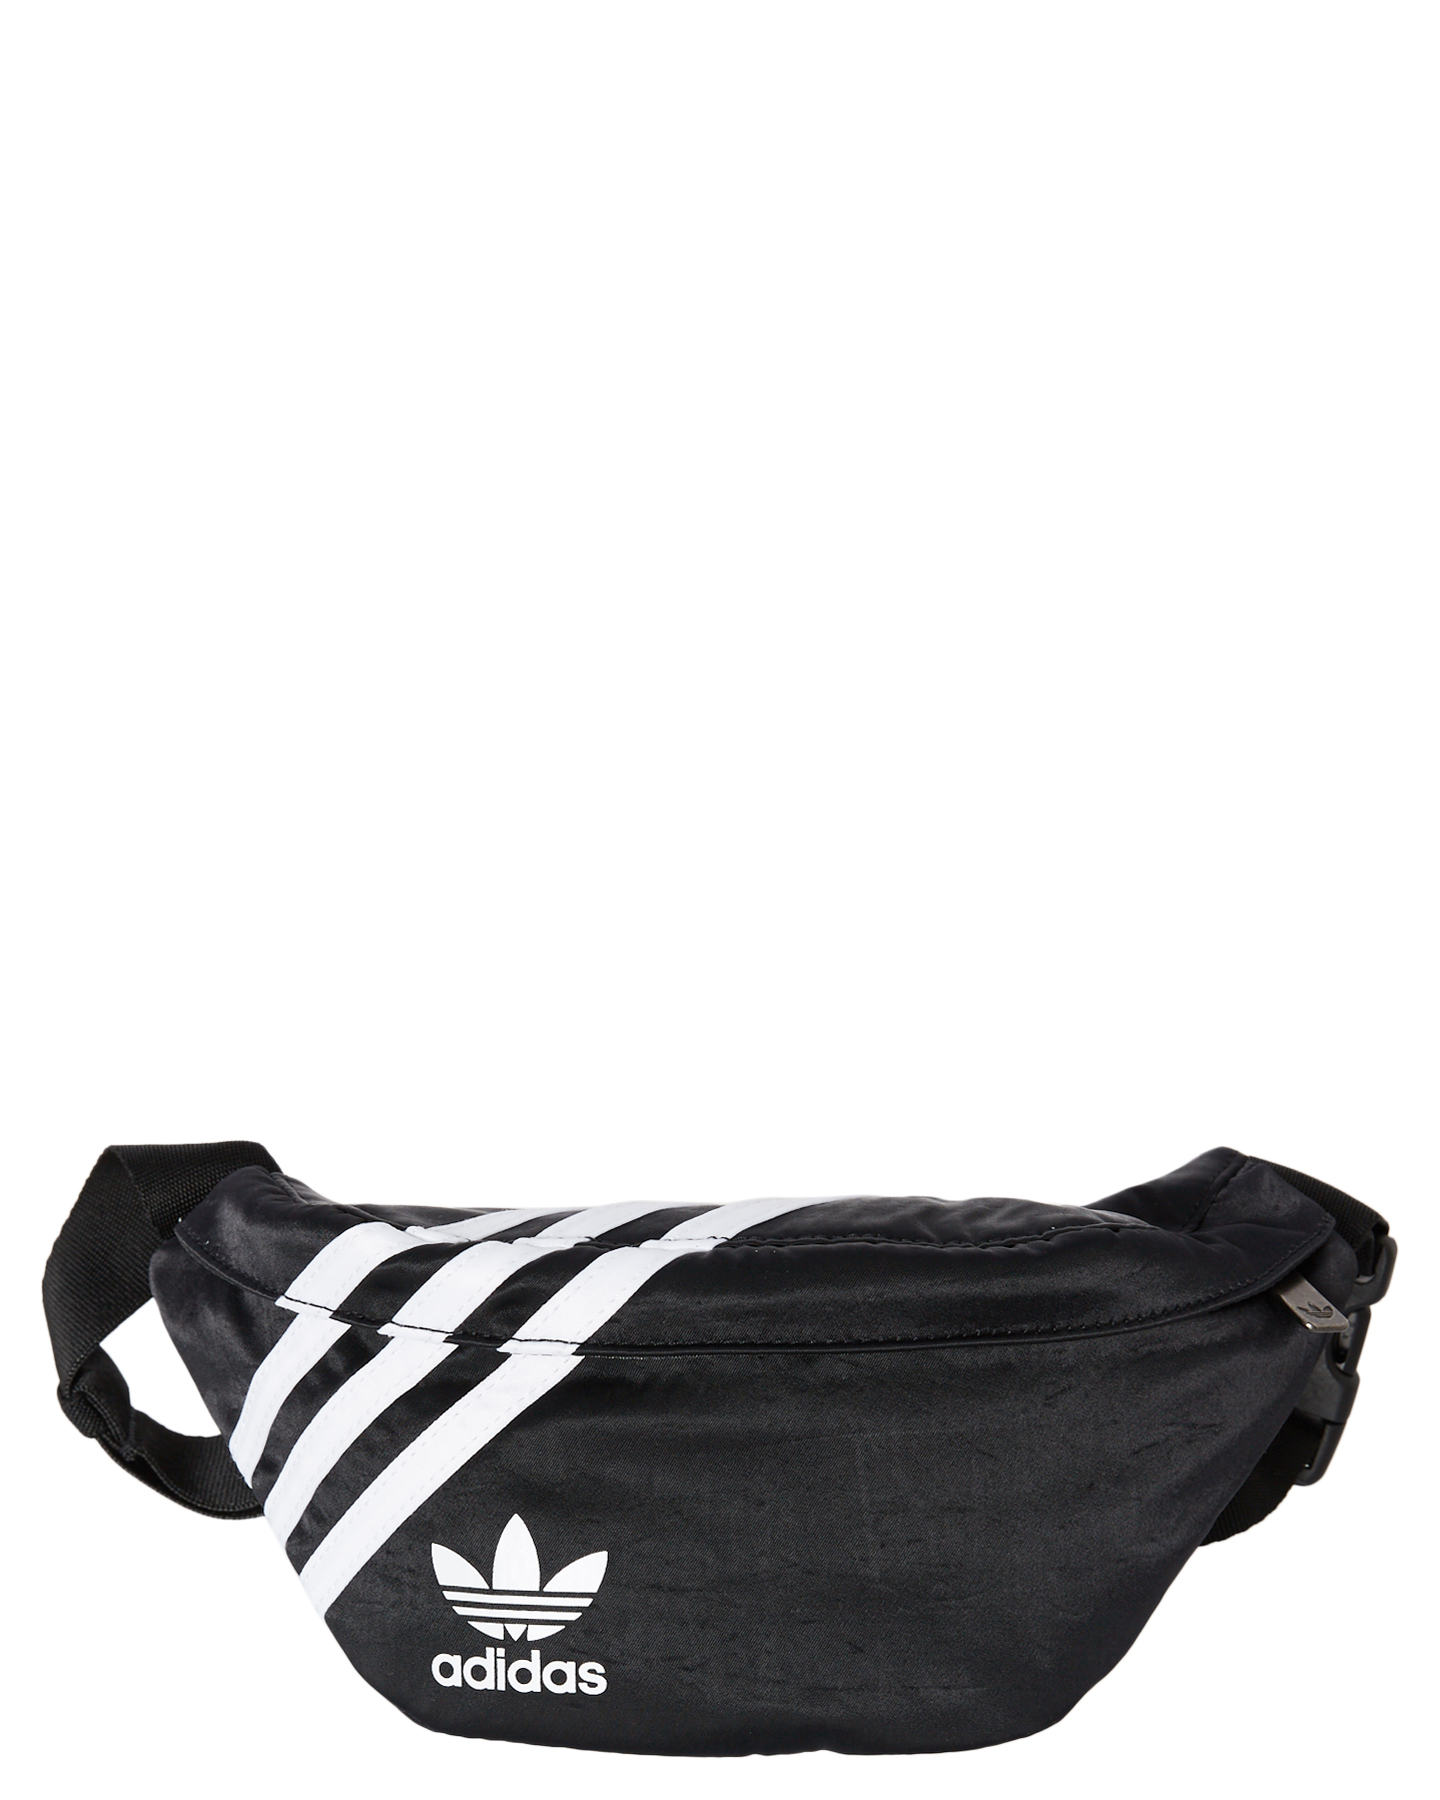 Adidas Waist Bag - Black | SurfStitch